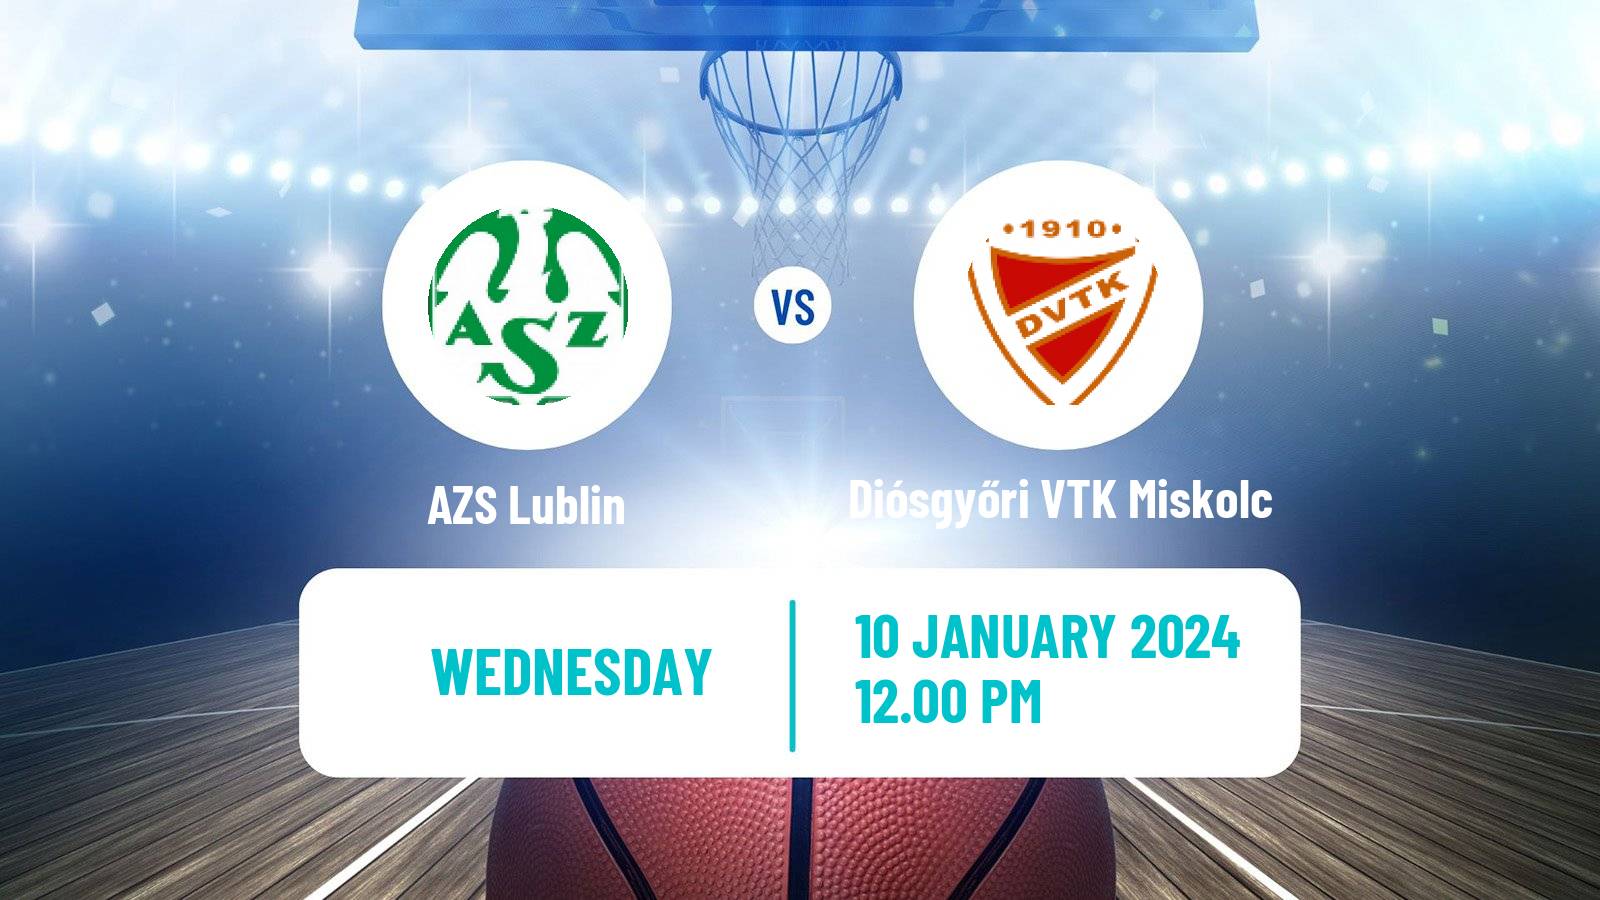 Basketball Euroleague Women AZS Lublin - Diósgyőri VTK Miskolc